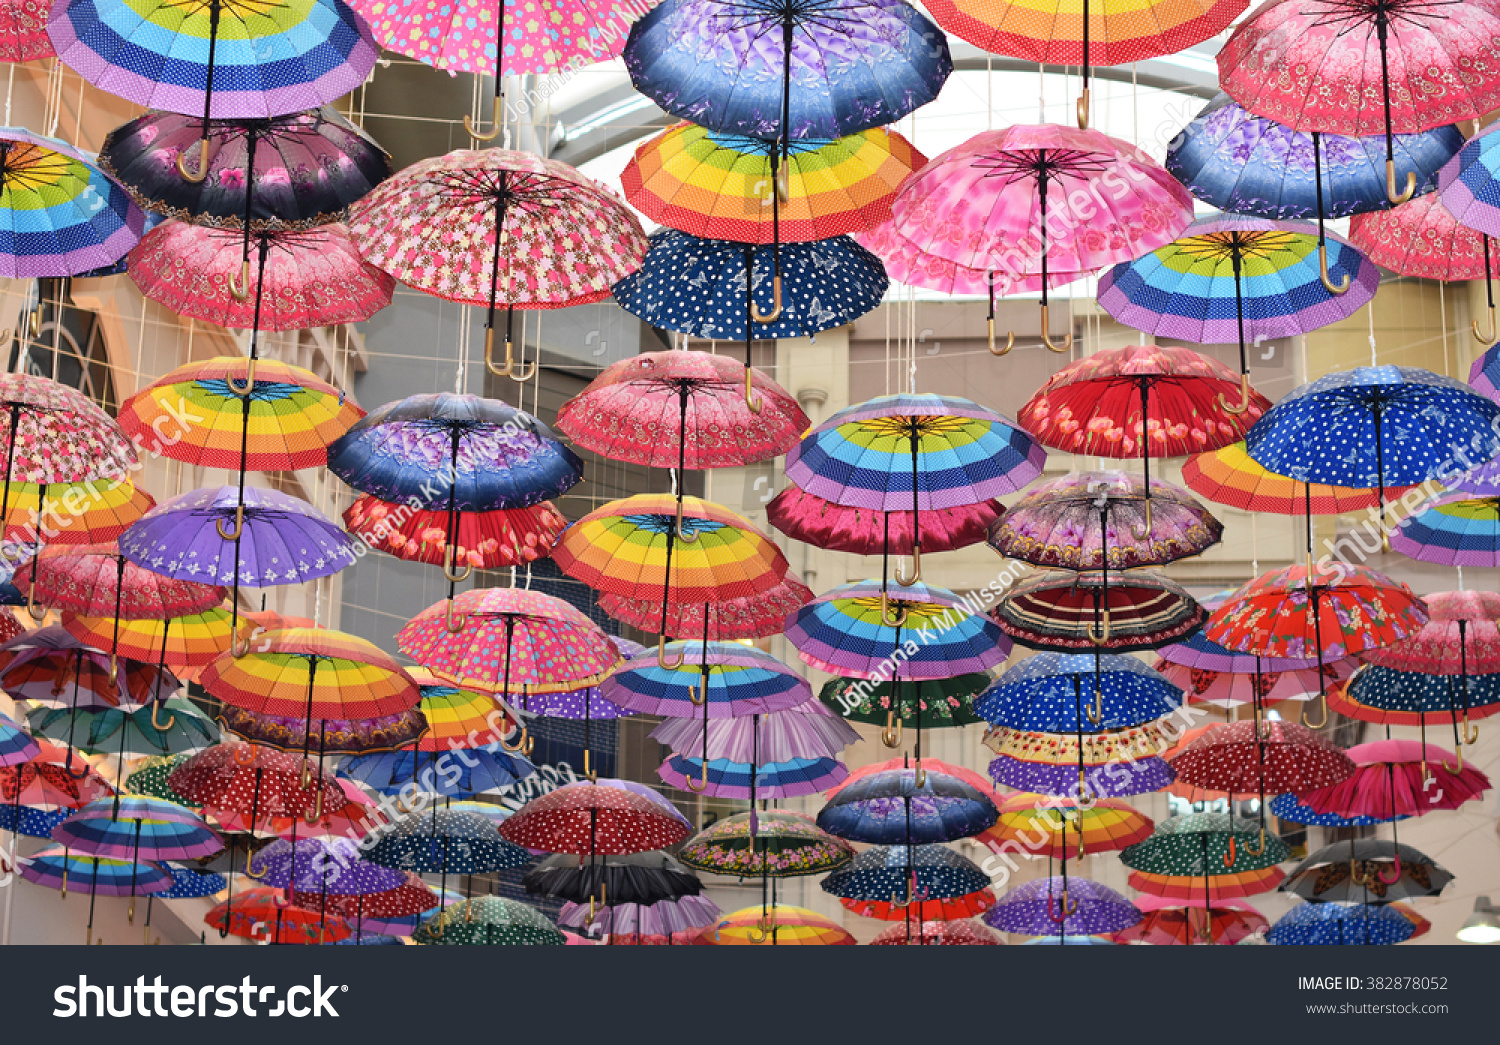 Umbrella Decoration Dubai Mall Royalty Free Stock Image